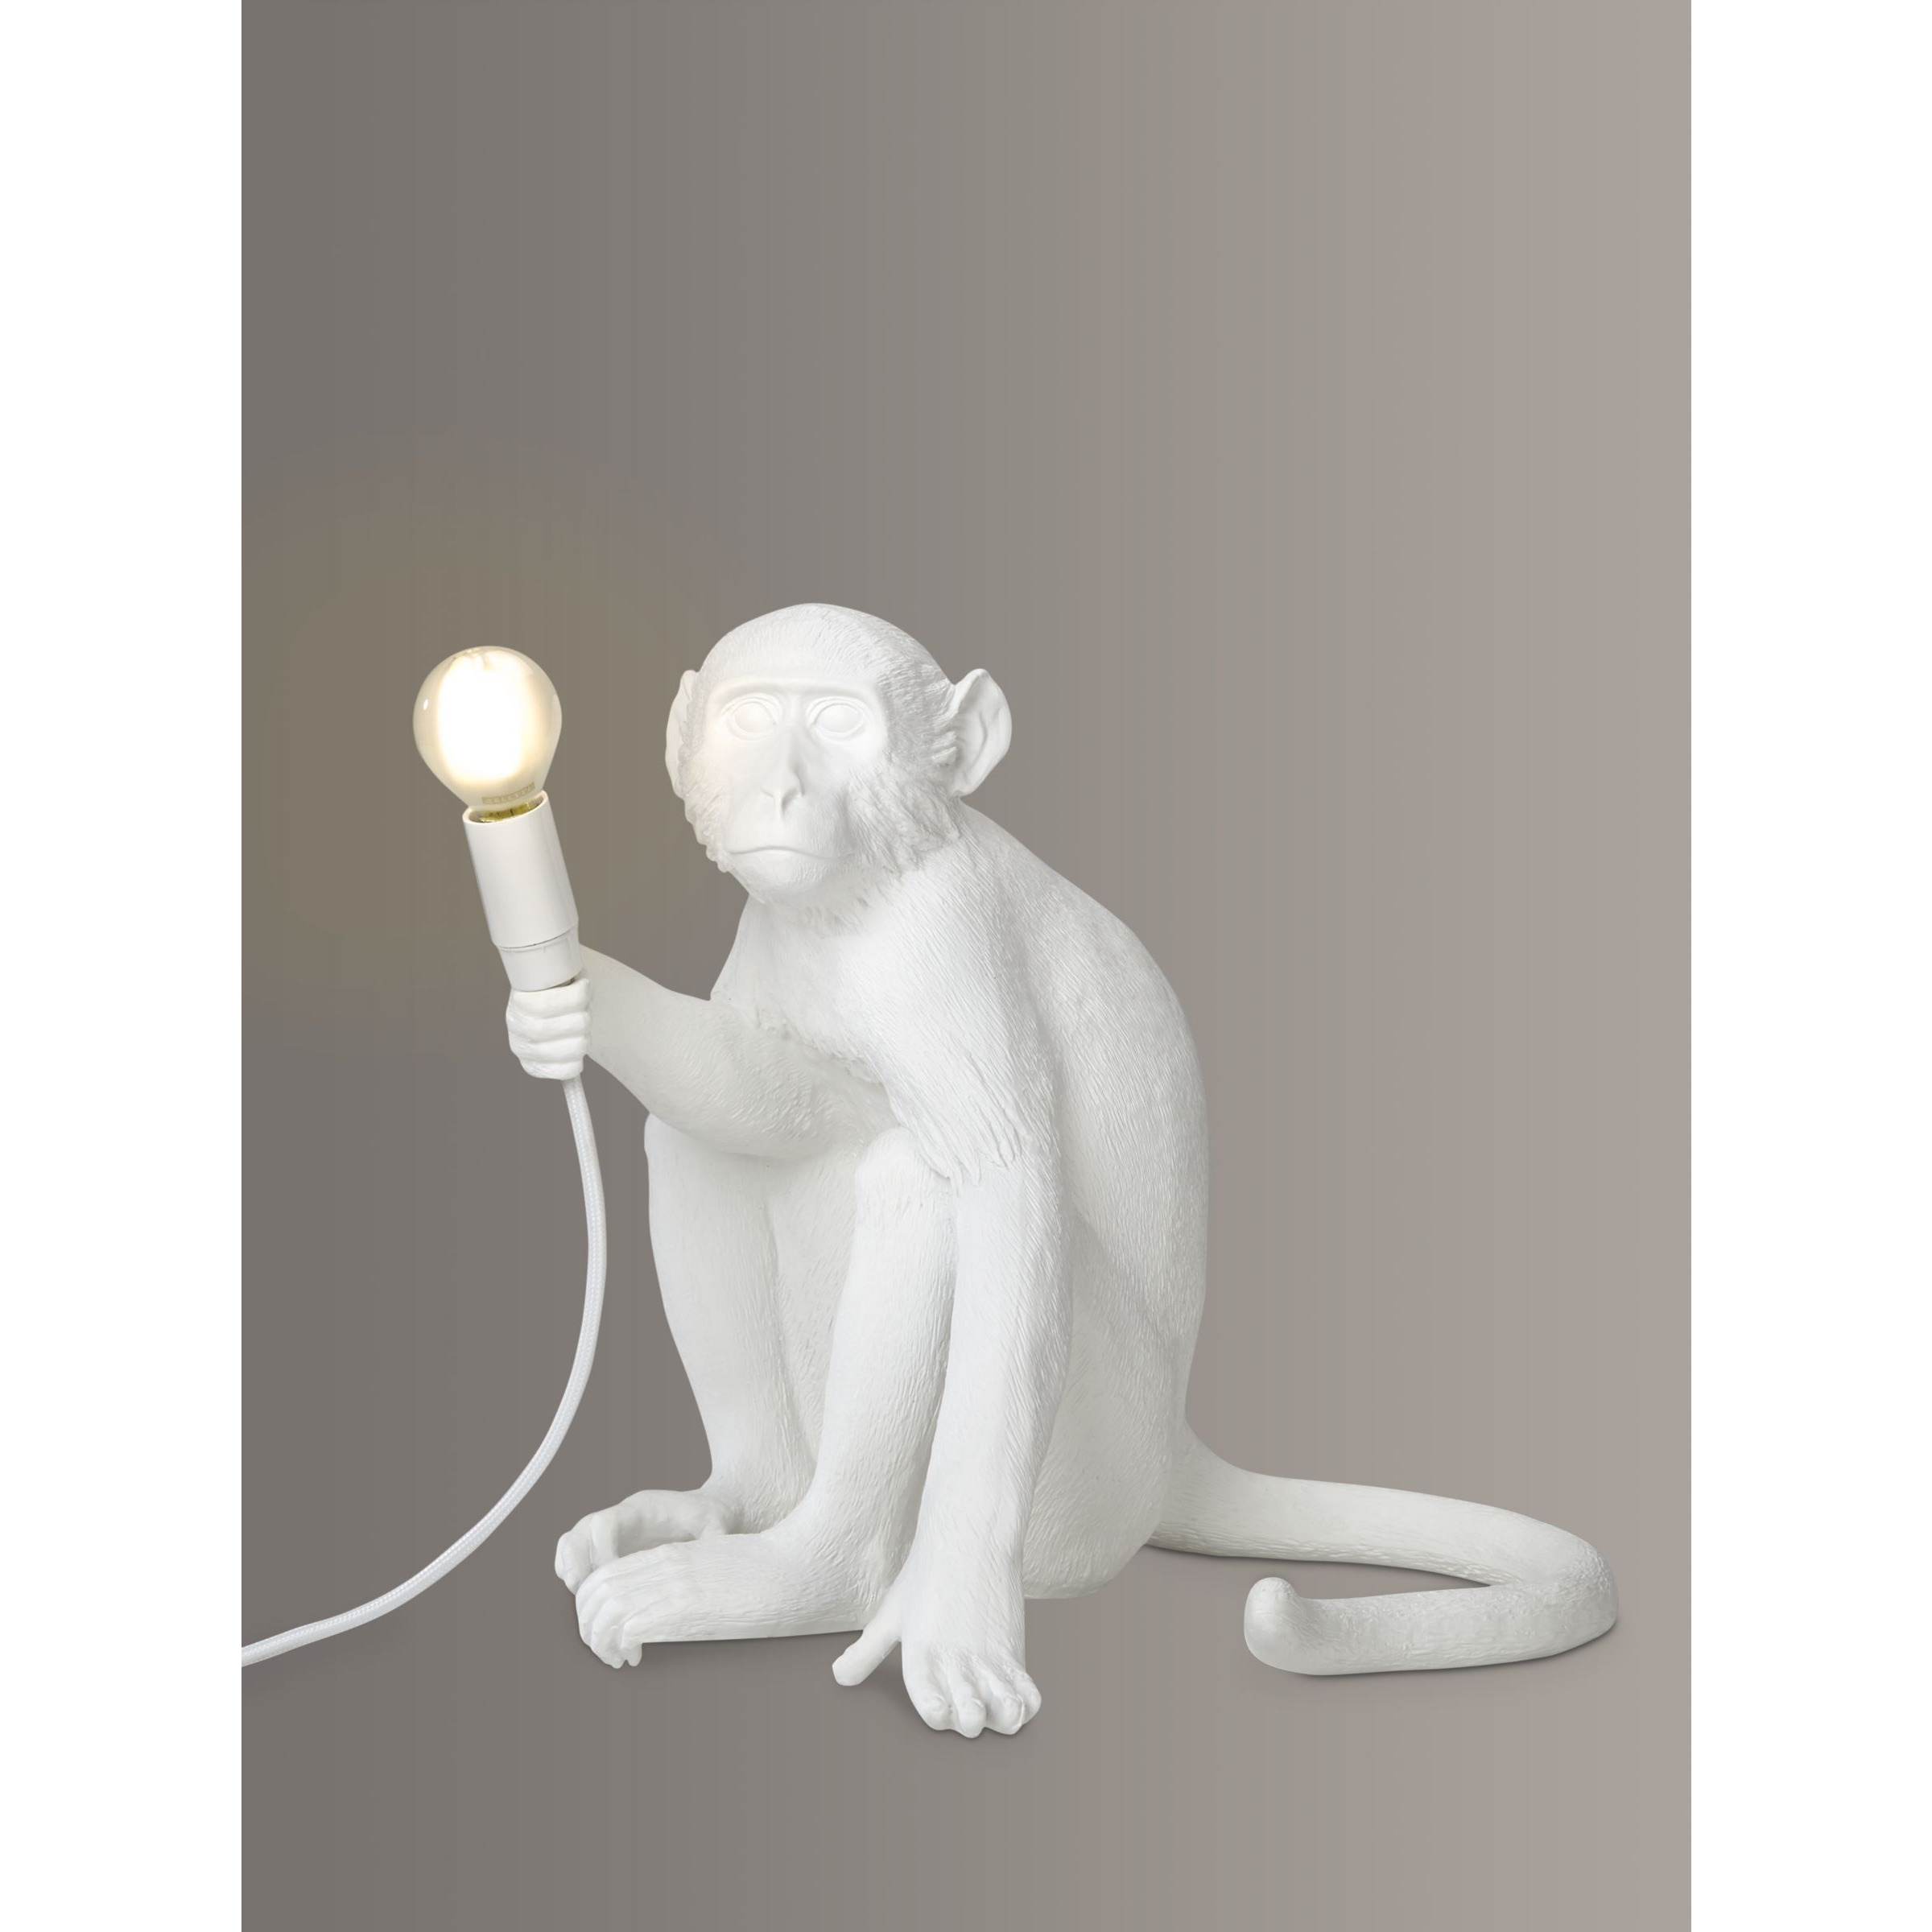 Seletti Sitting Monkey Table Lamp, White - image 1